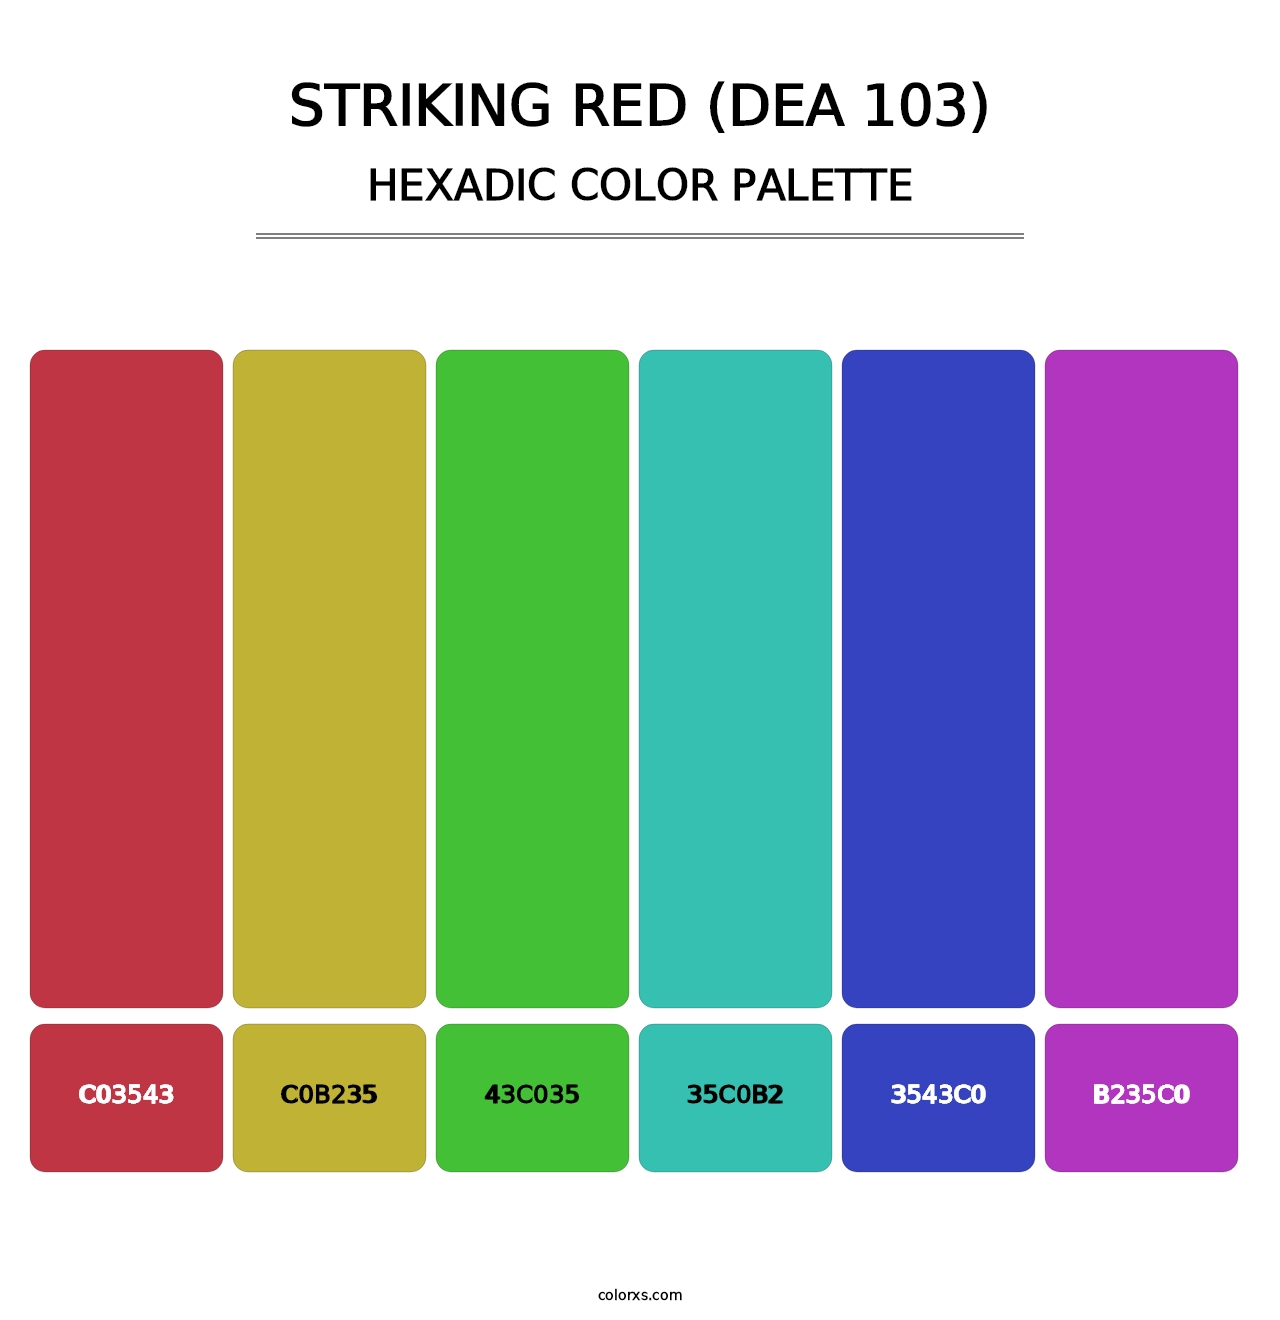 Striking Red (DEA 103) - Hexadic Color Palette